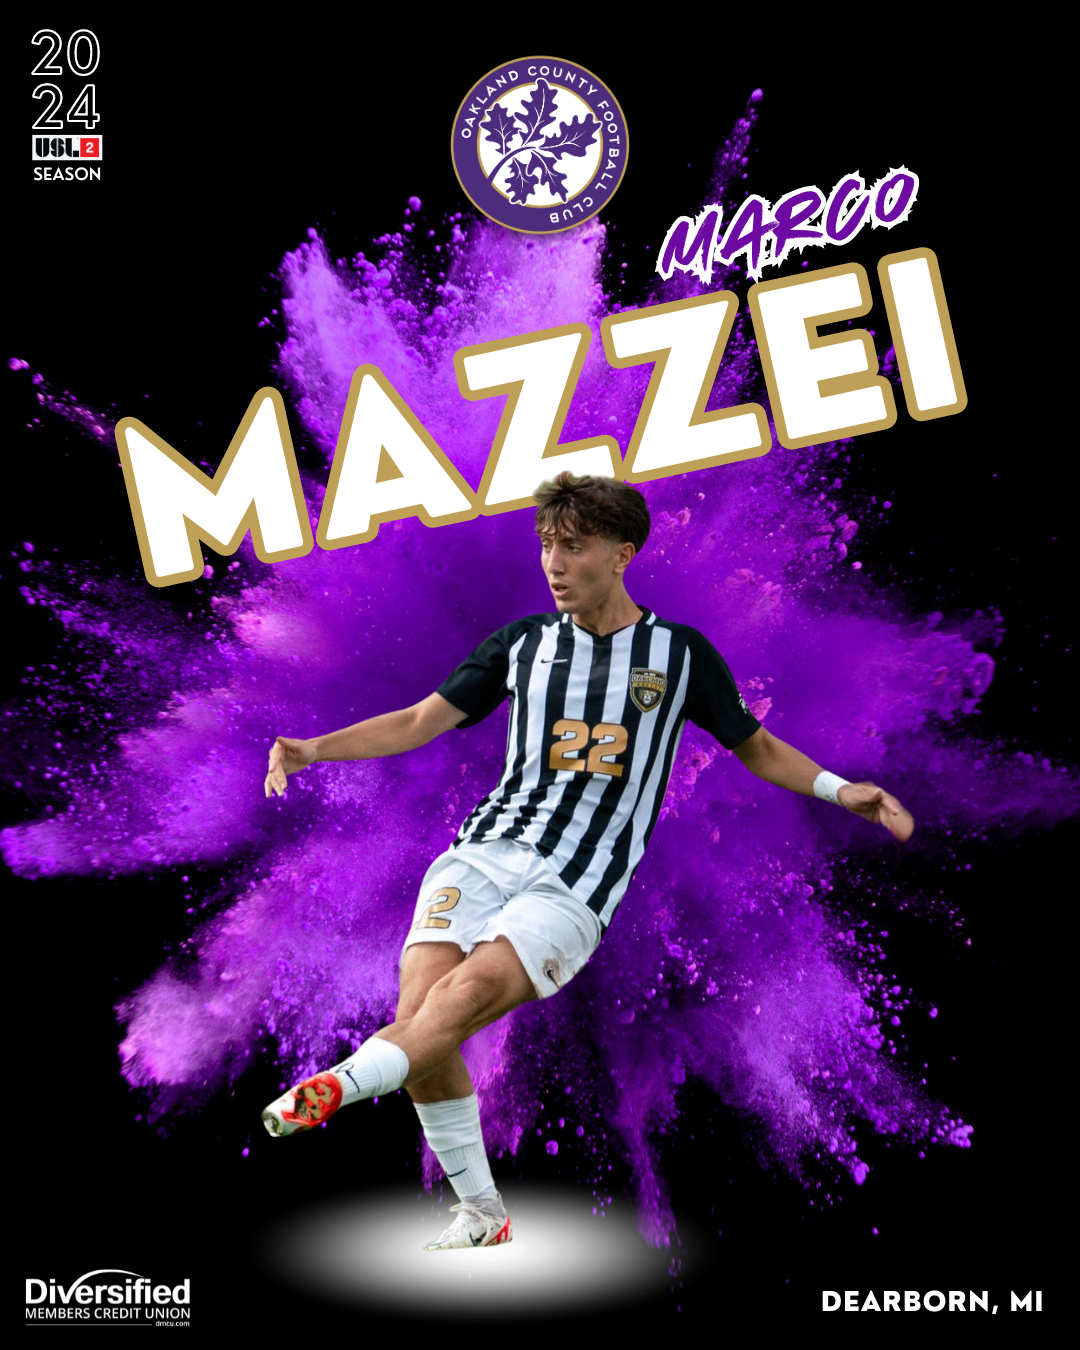 Marco Mazzei